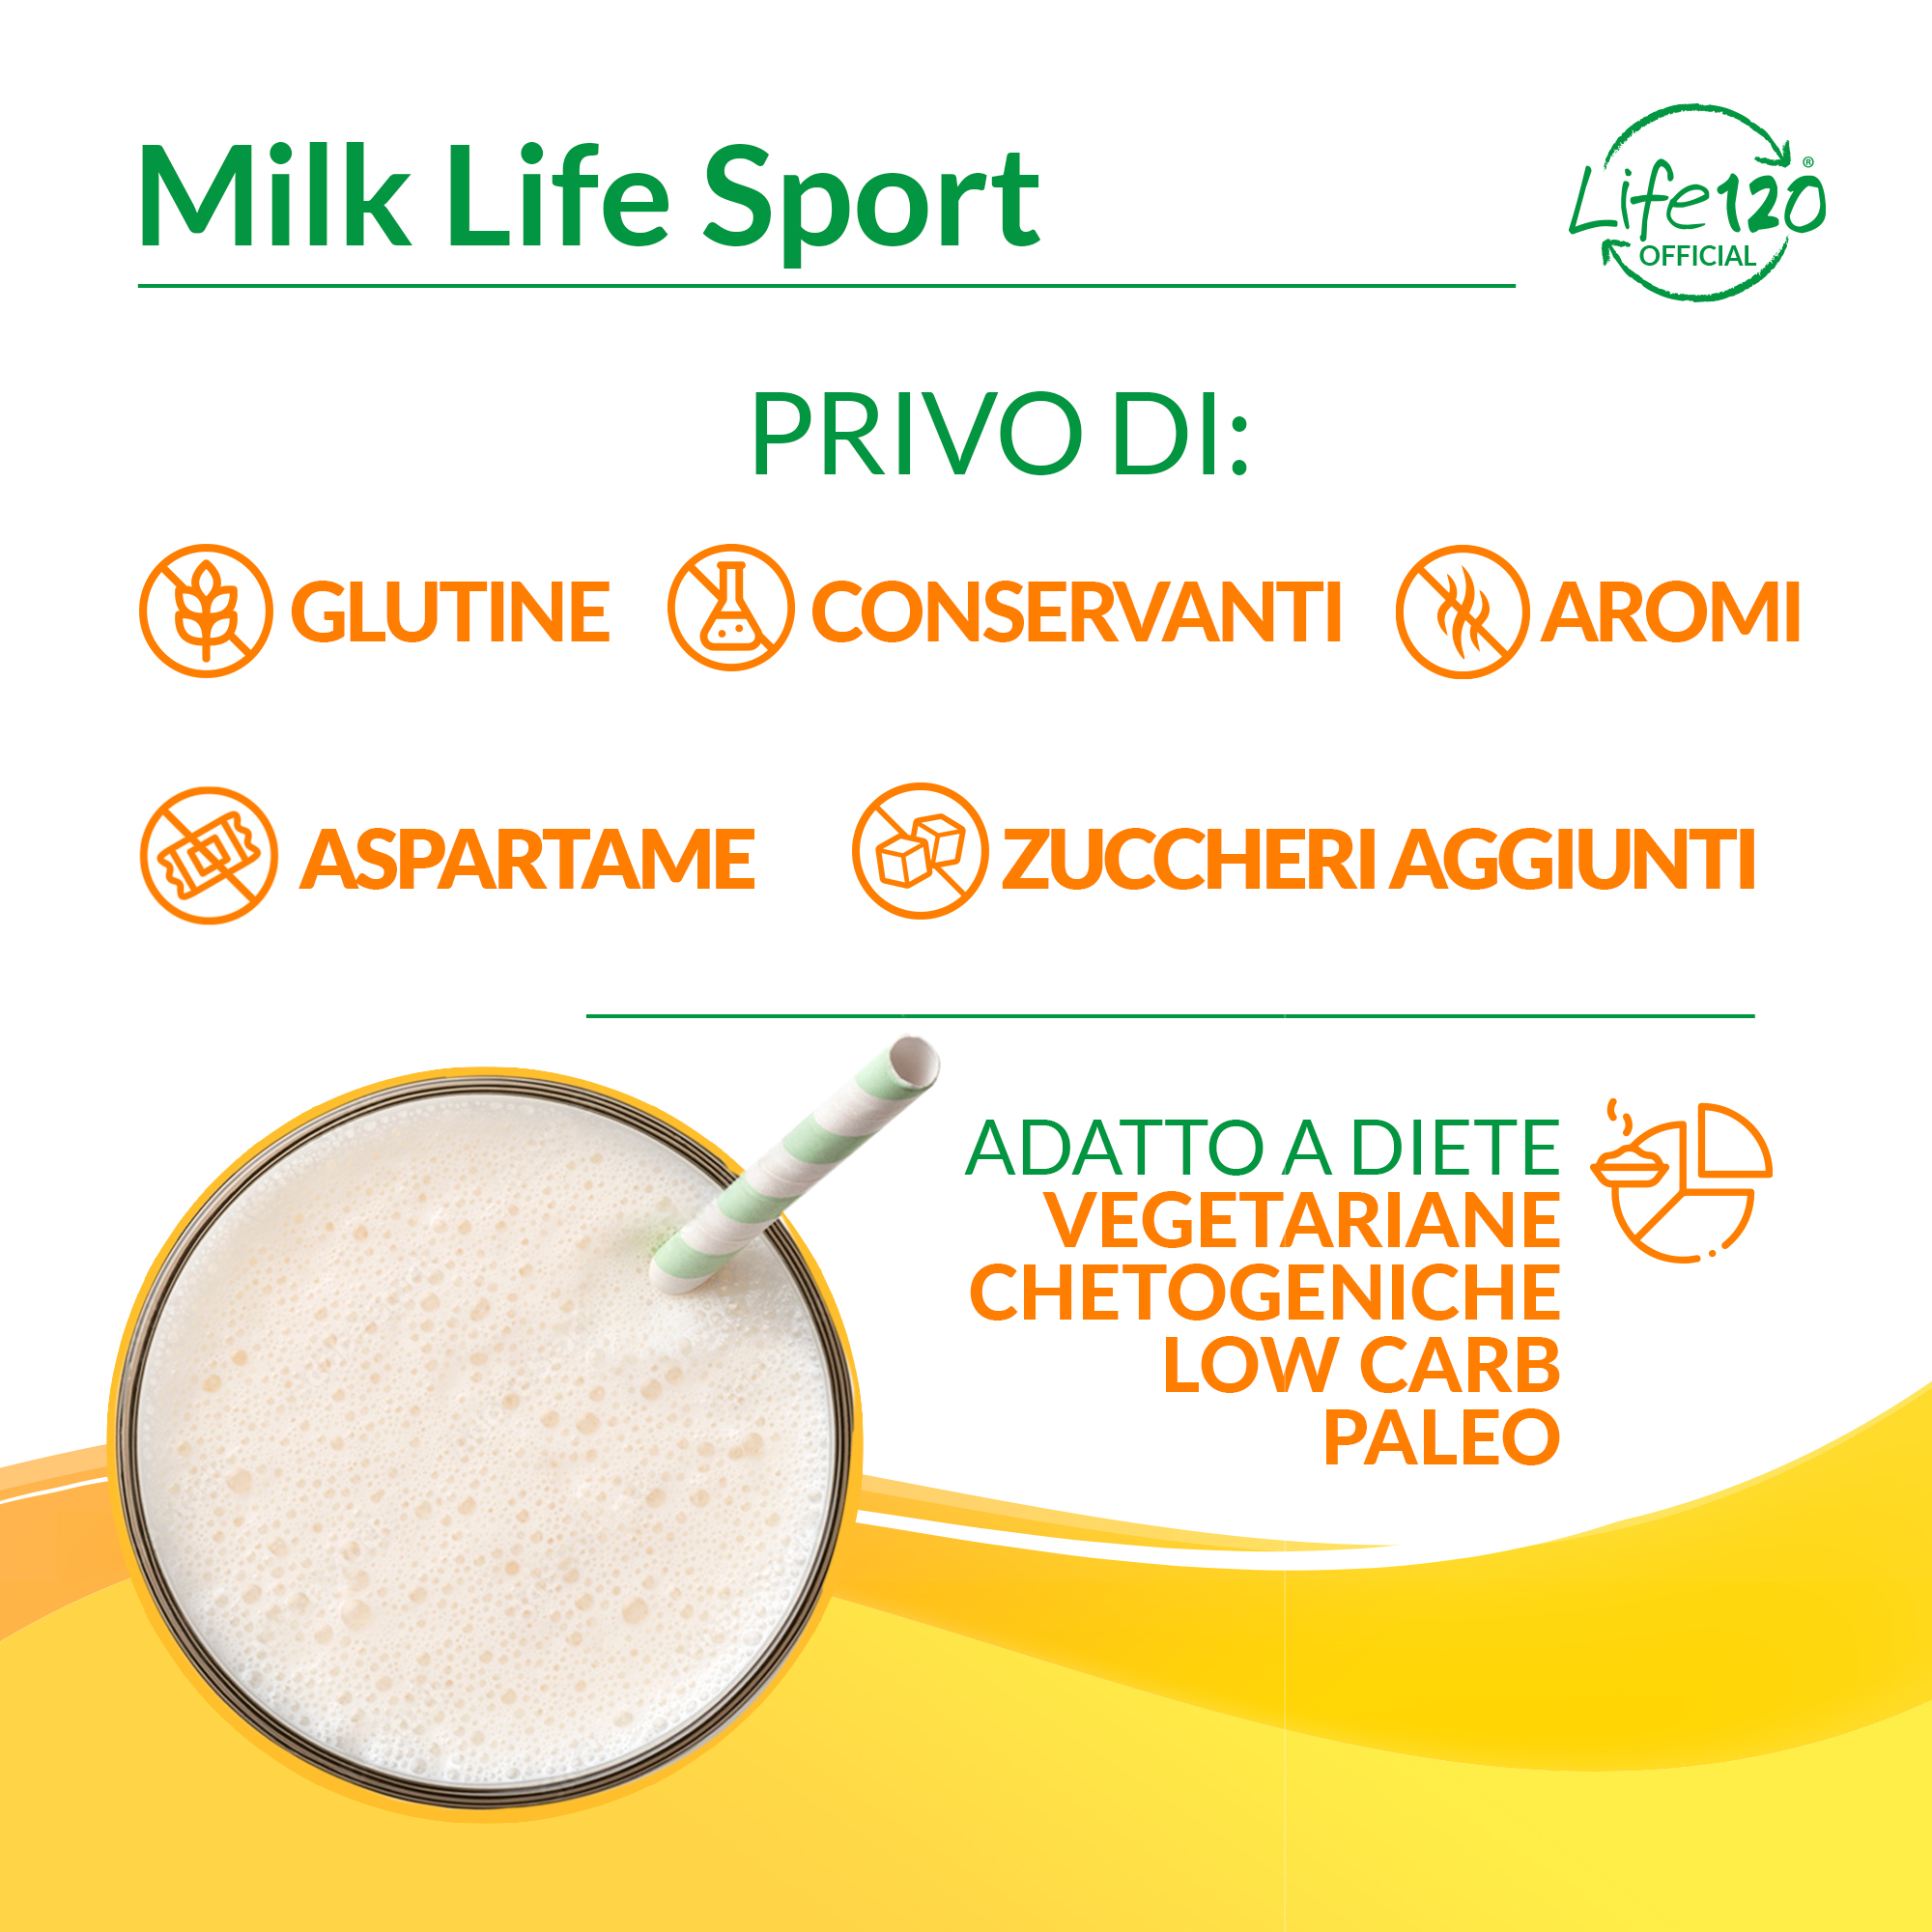 Milk Life Sport